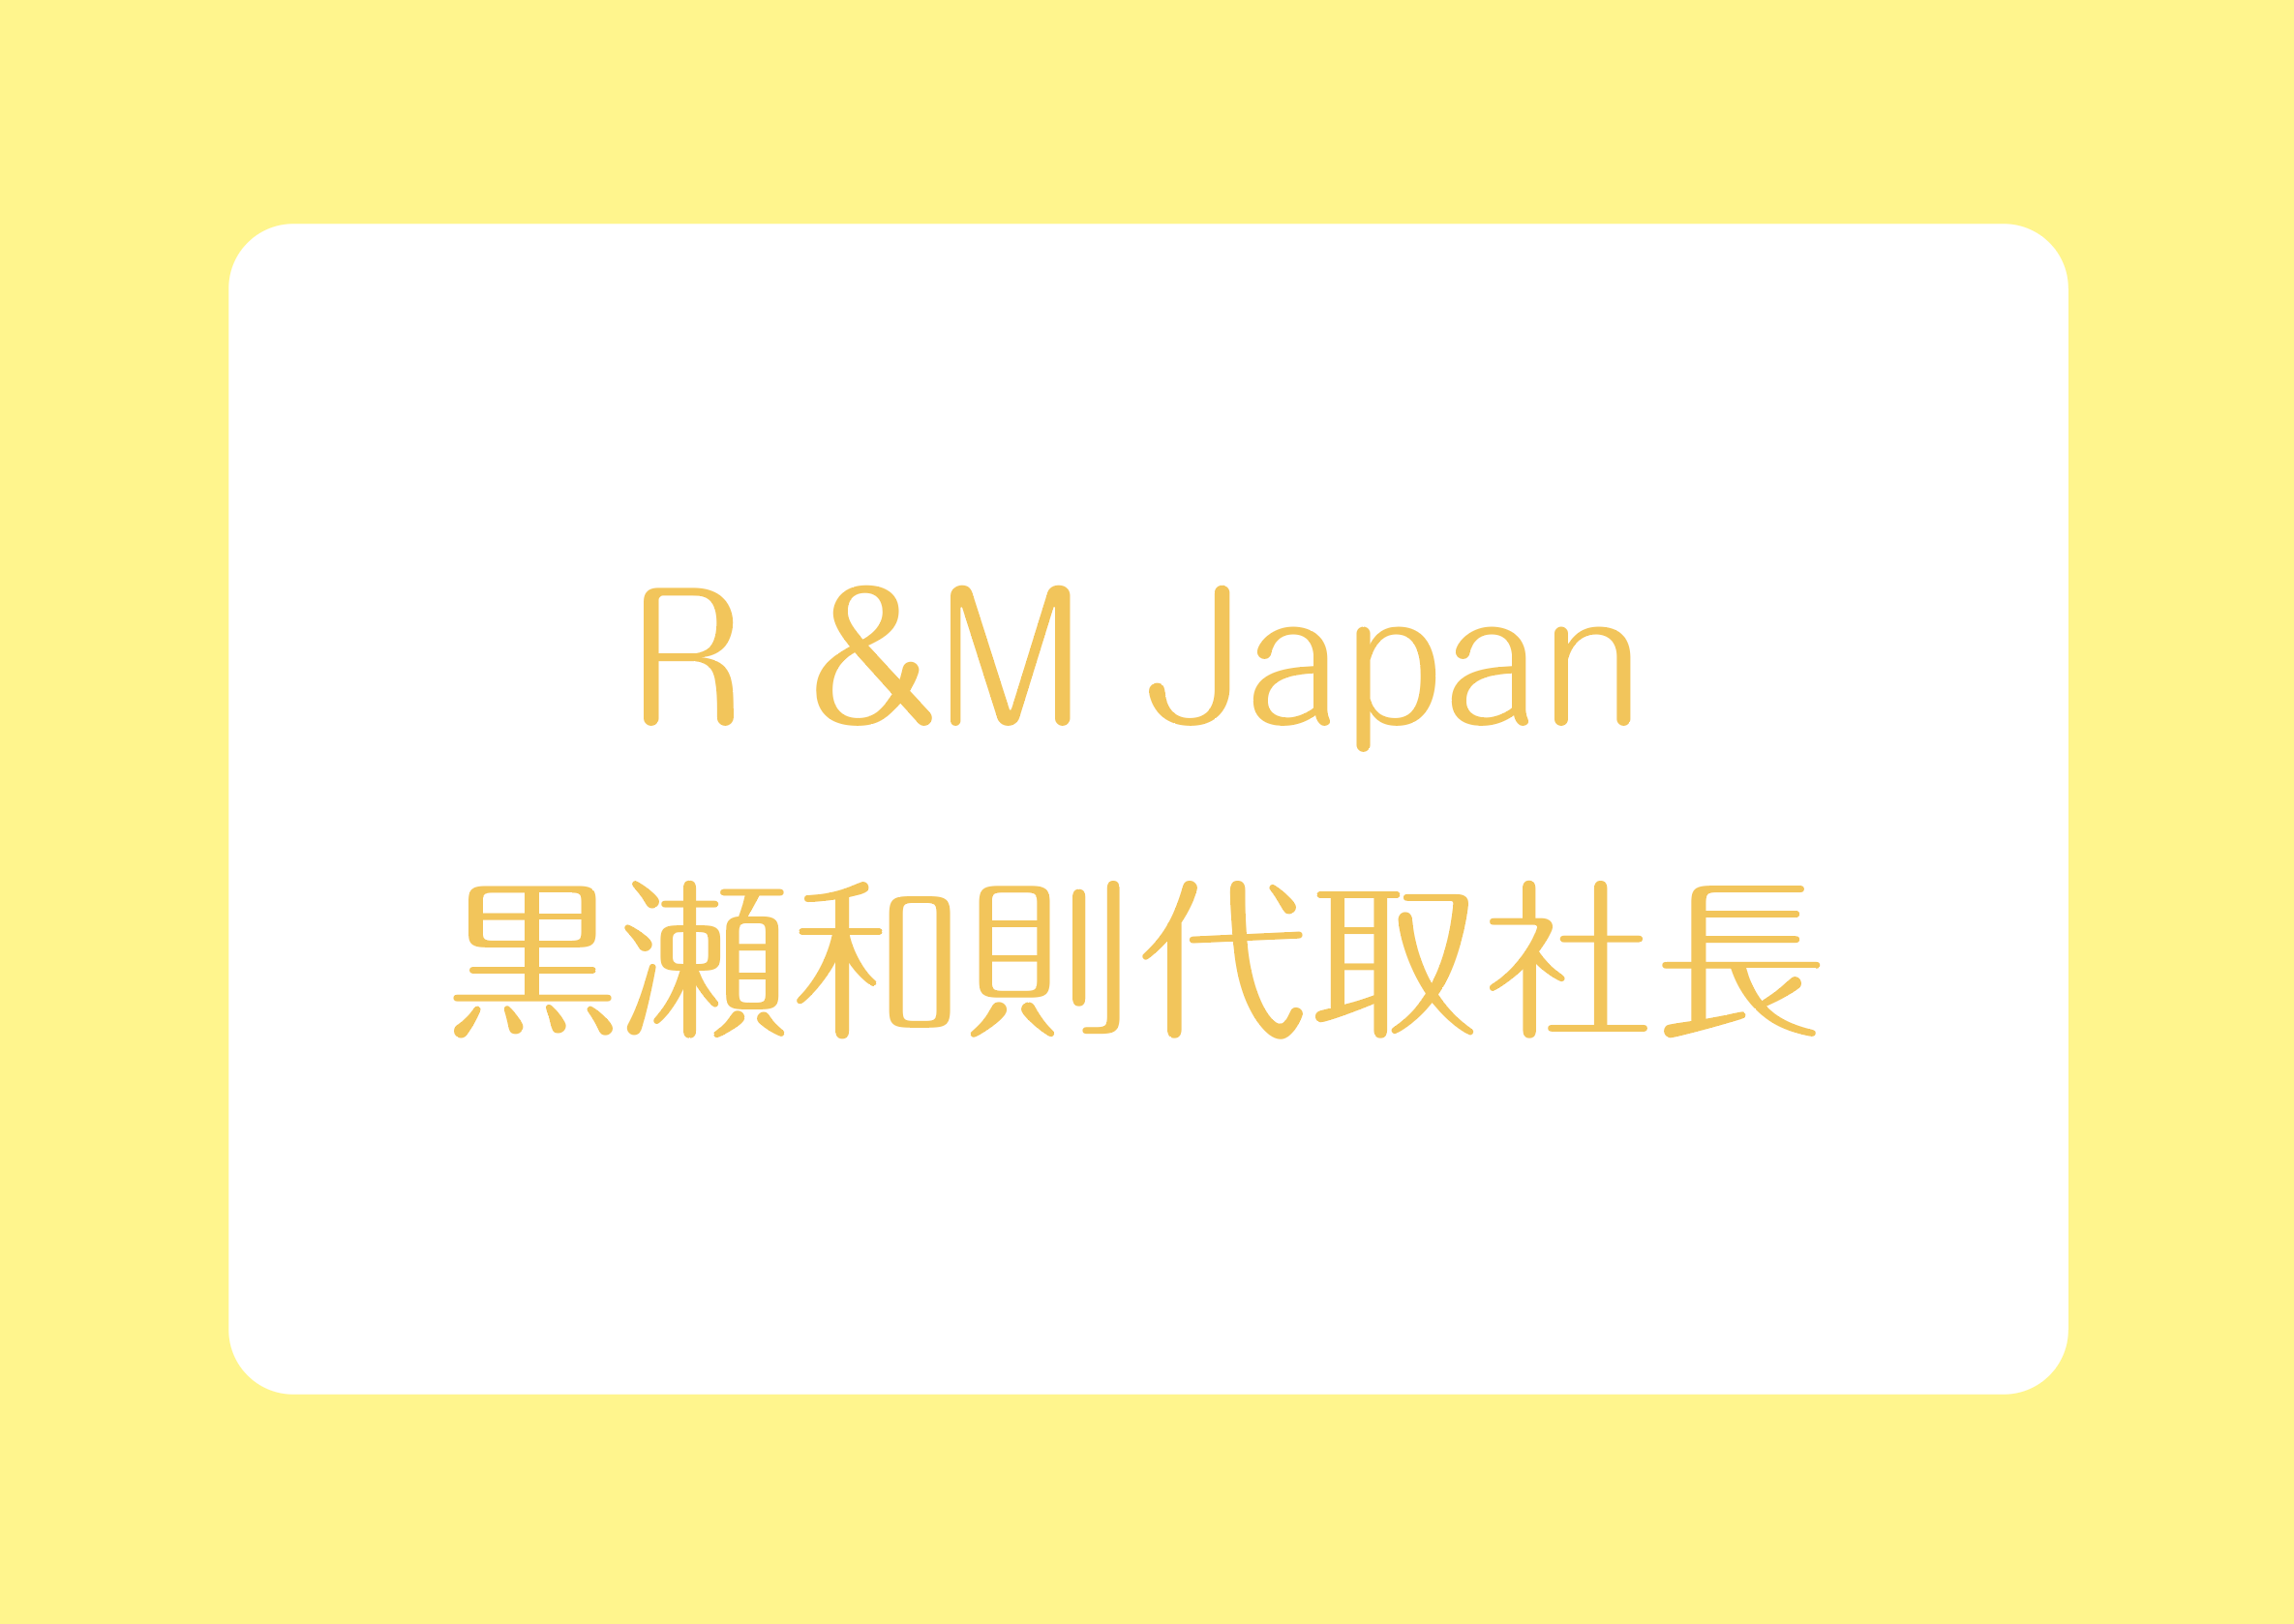 R &M Japan 黒瀬和則代取社長の画像